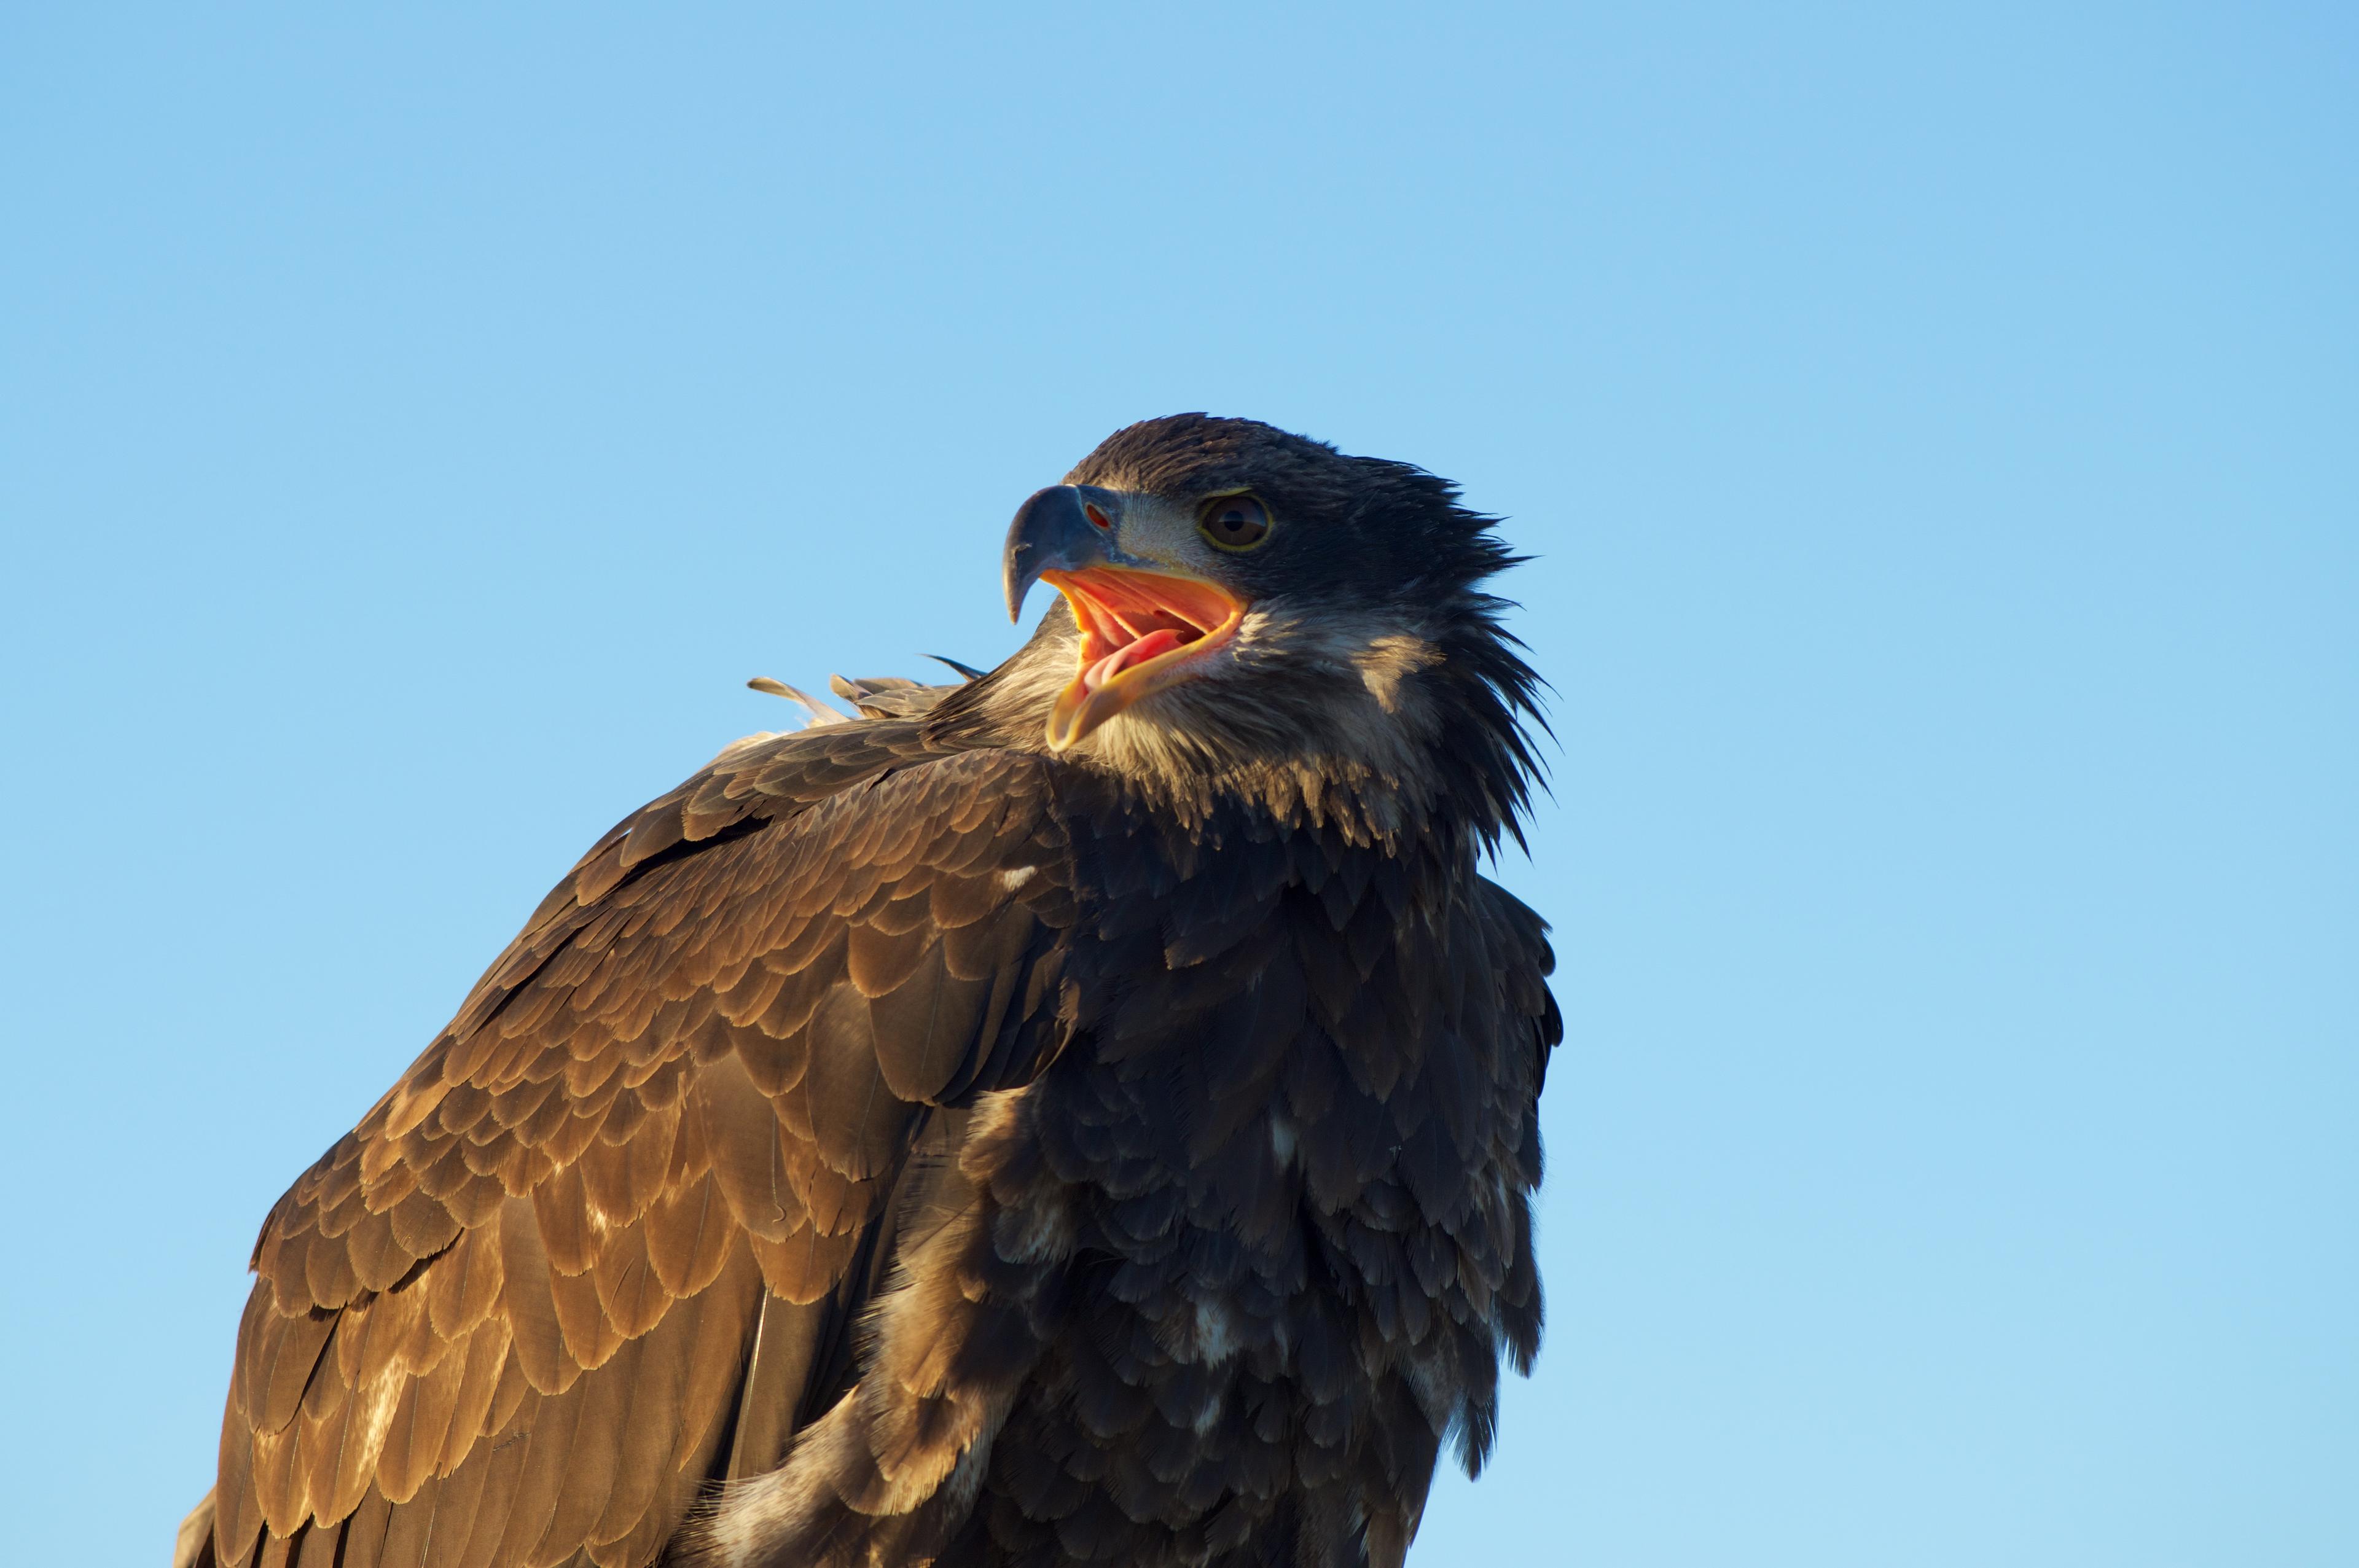 Juvenile bald eagle on a blue background